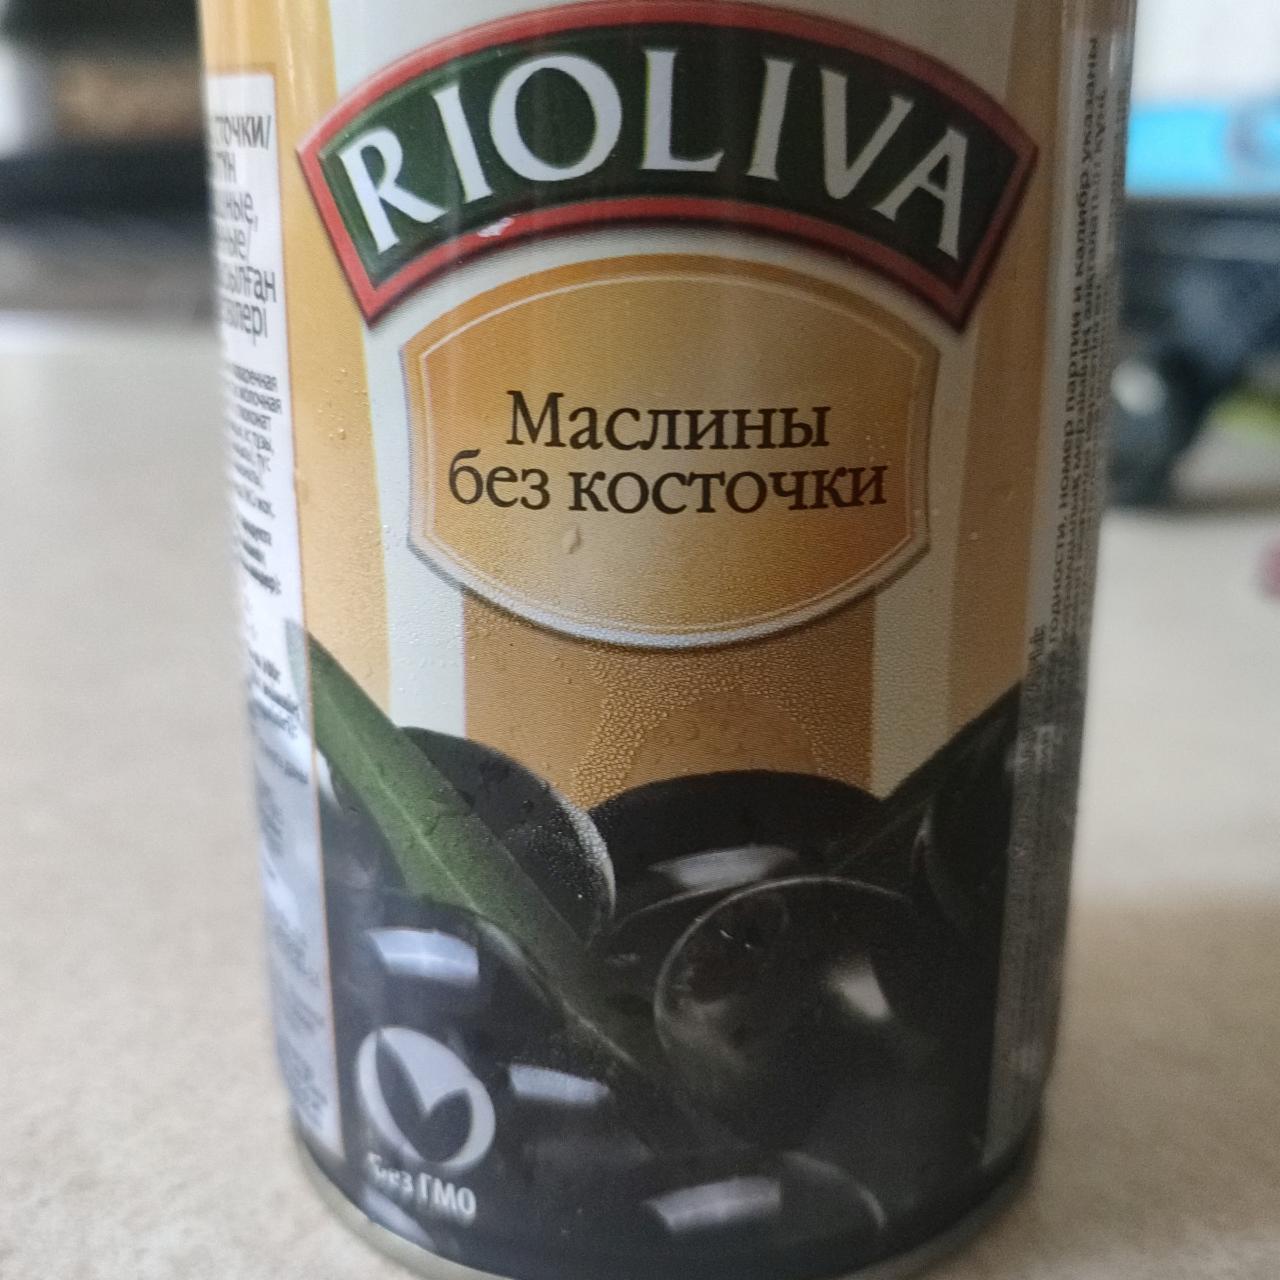 Фото - маслины без косточки Rioliva